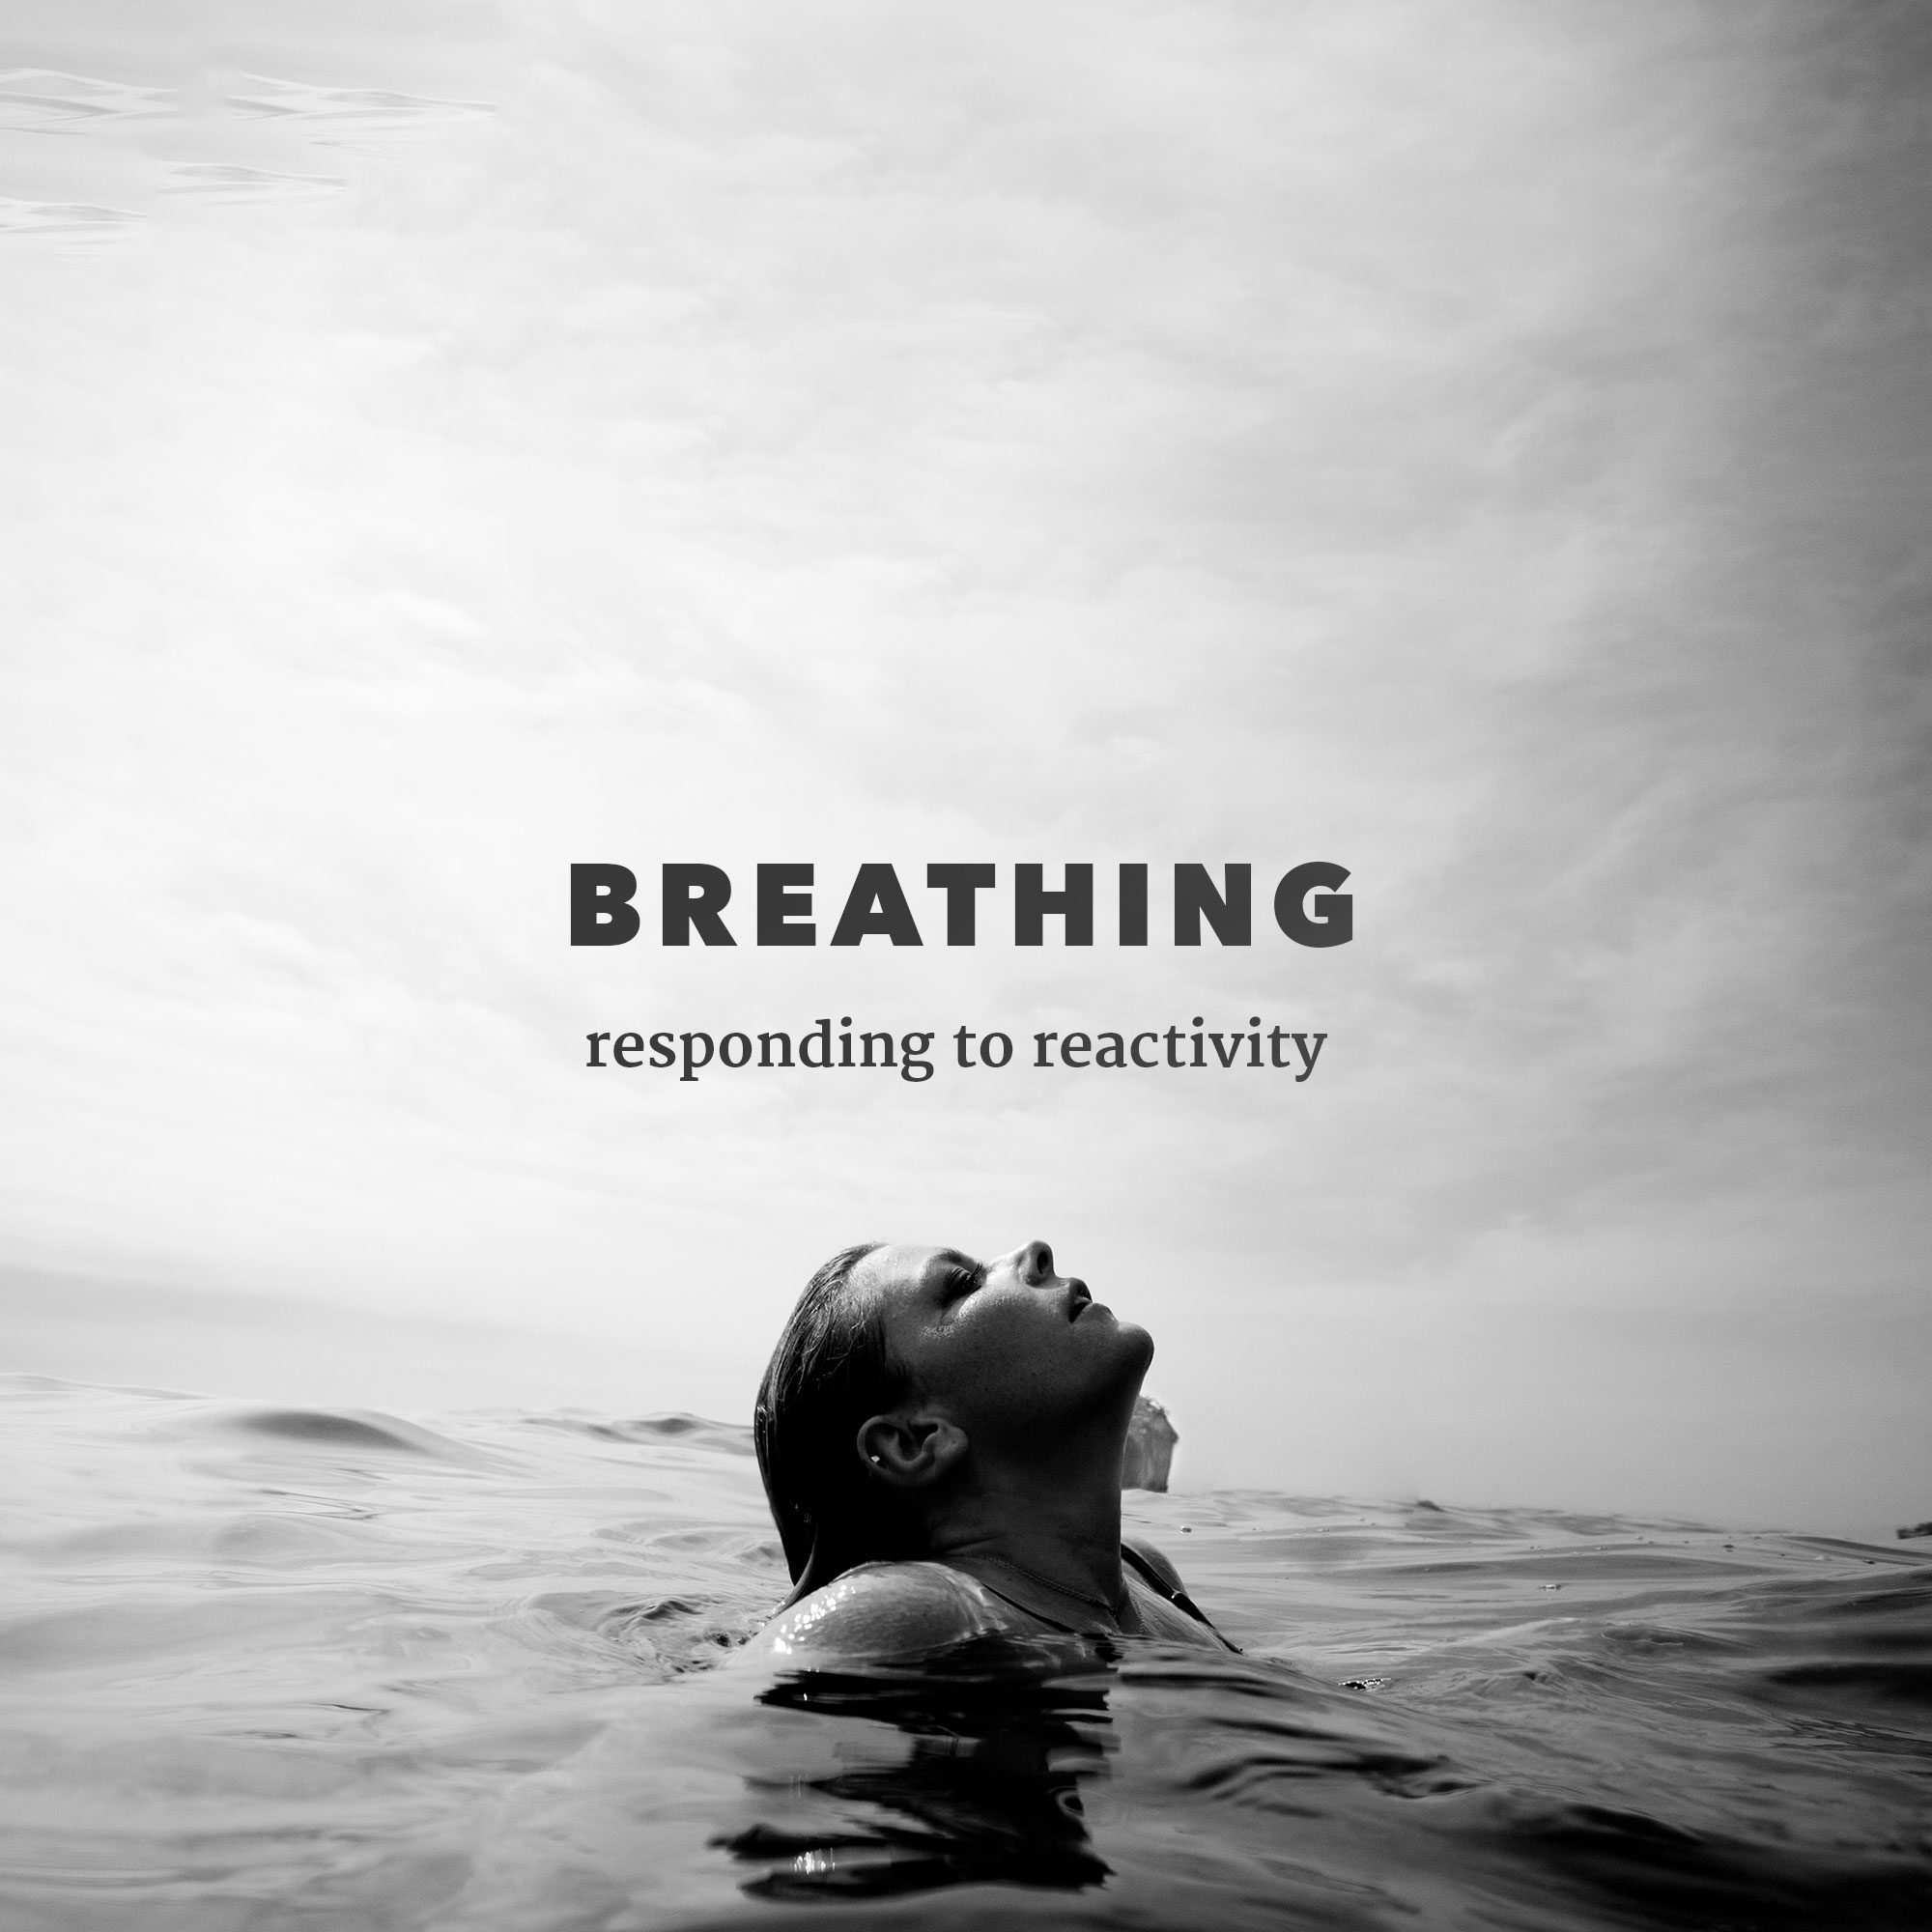 BREATHING responding to reactivity